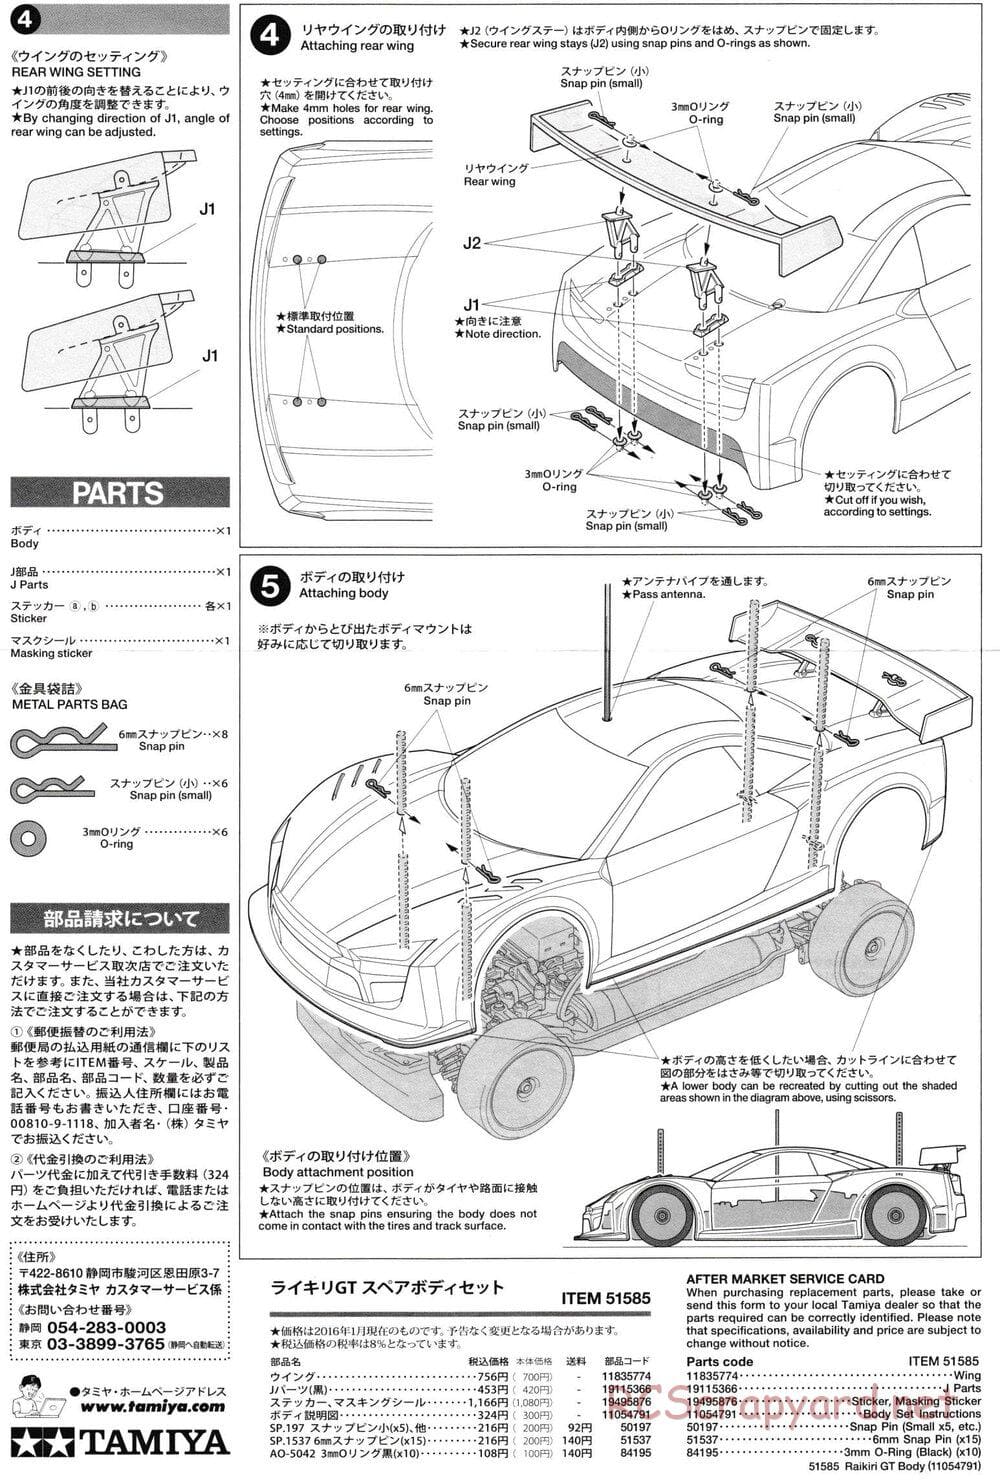 Tamiya - Raikiri GT - TT-02 Chassis - Body Manual - Page 4